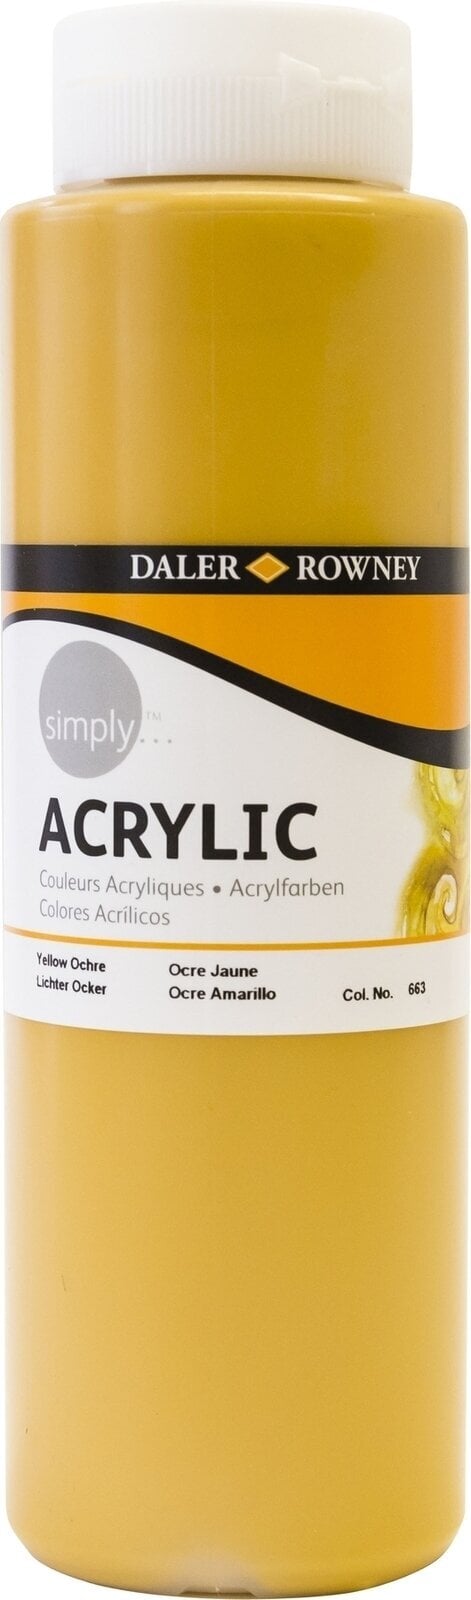 Acrylic Paint Daler Rowney Simply Acrylic Paint Yellow Ochre 750 ml 1 pc